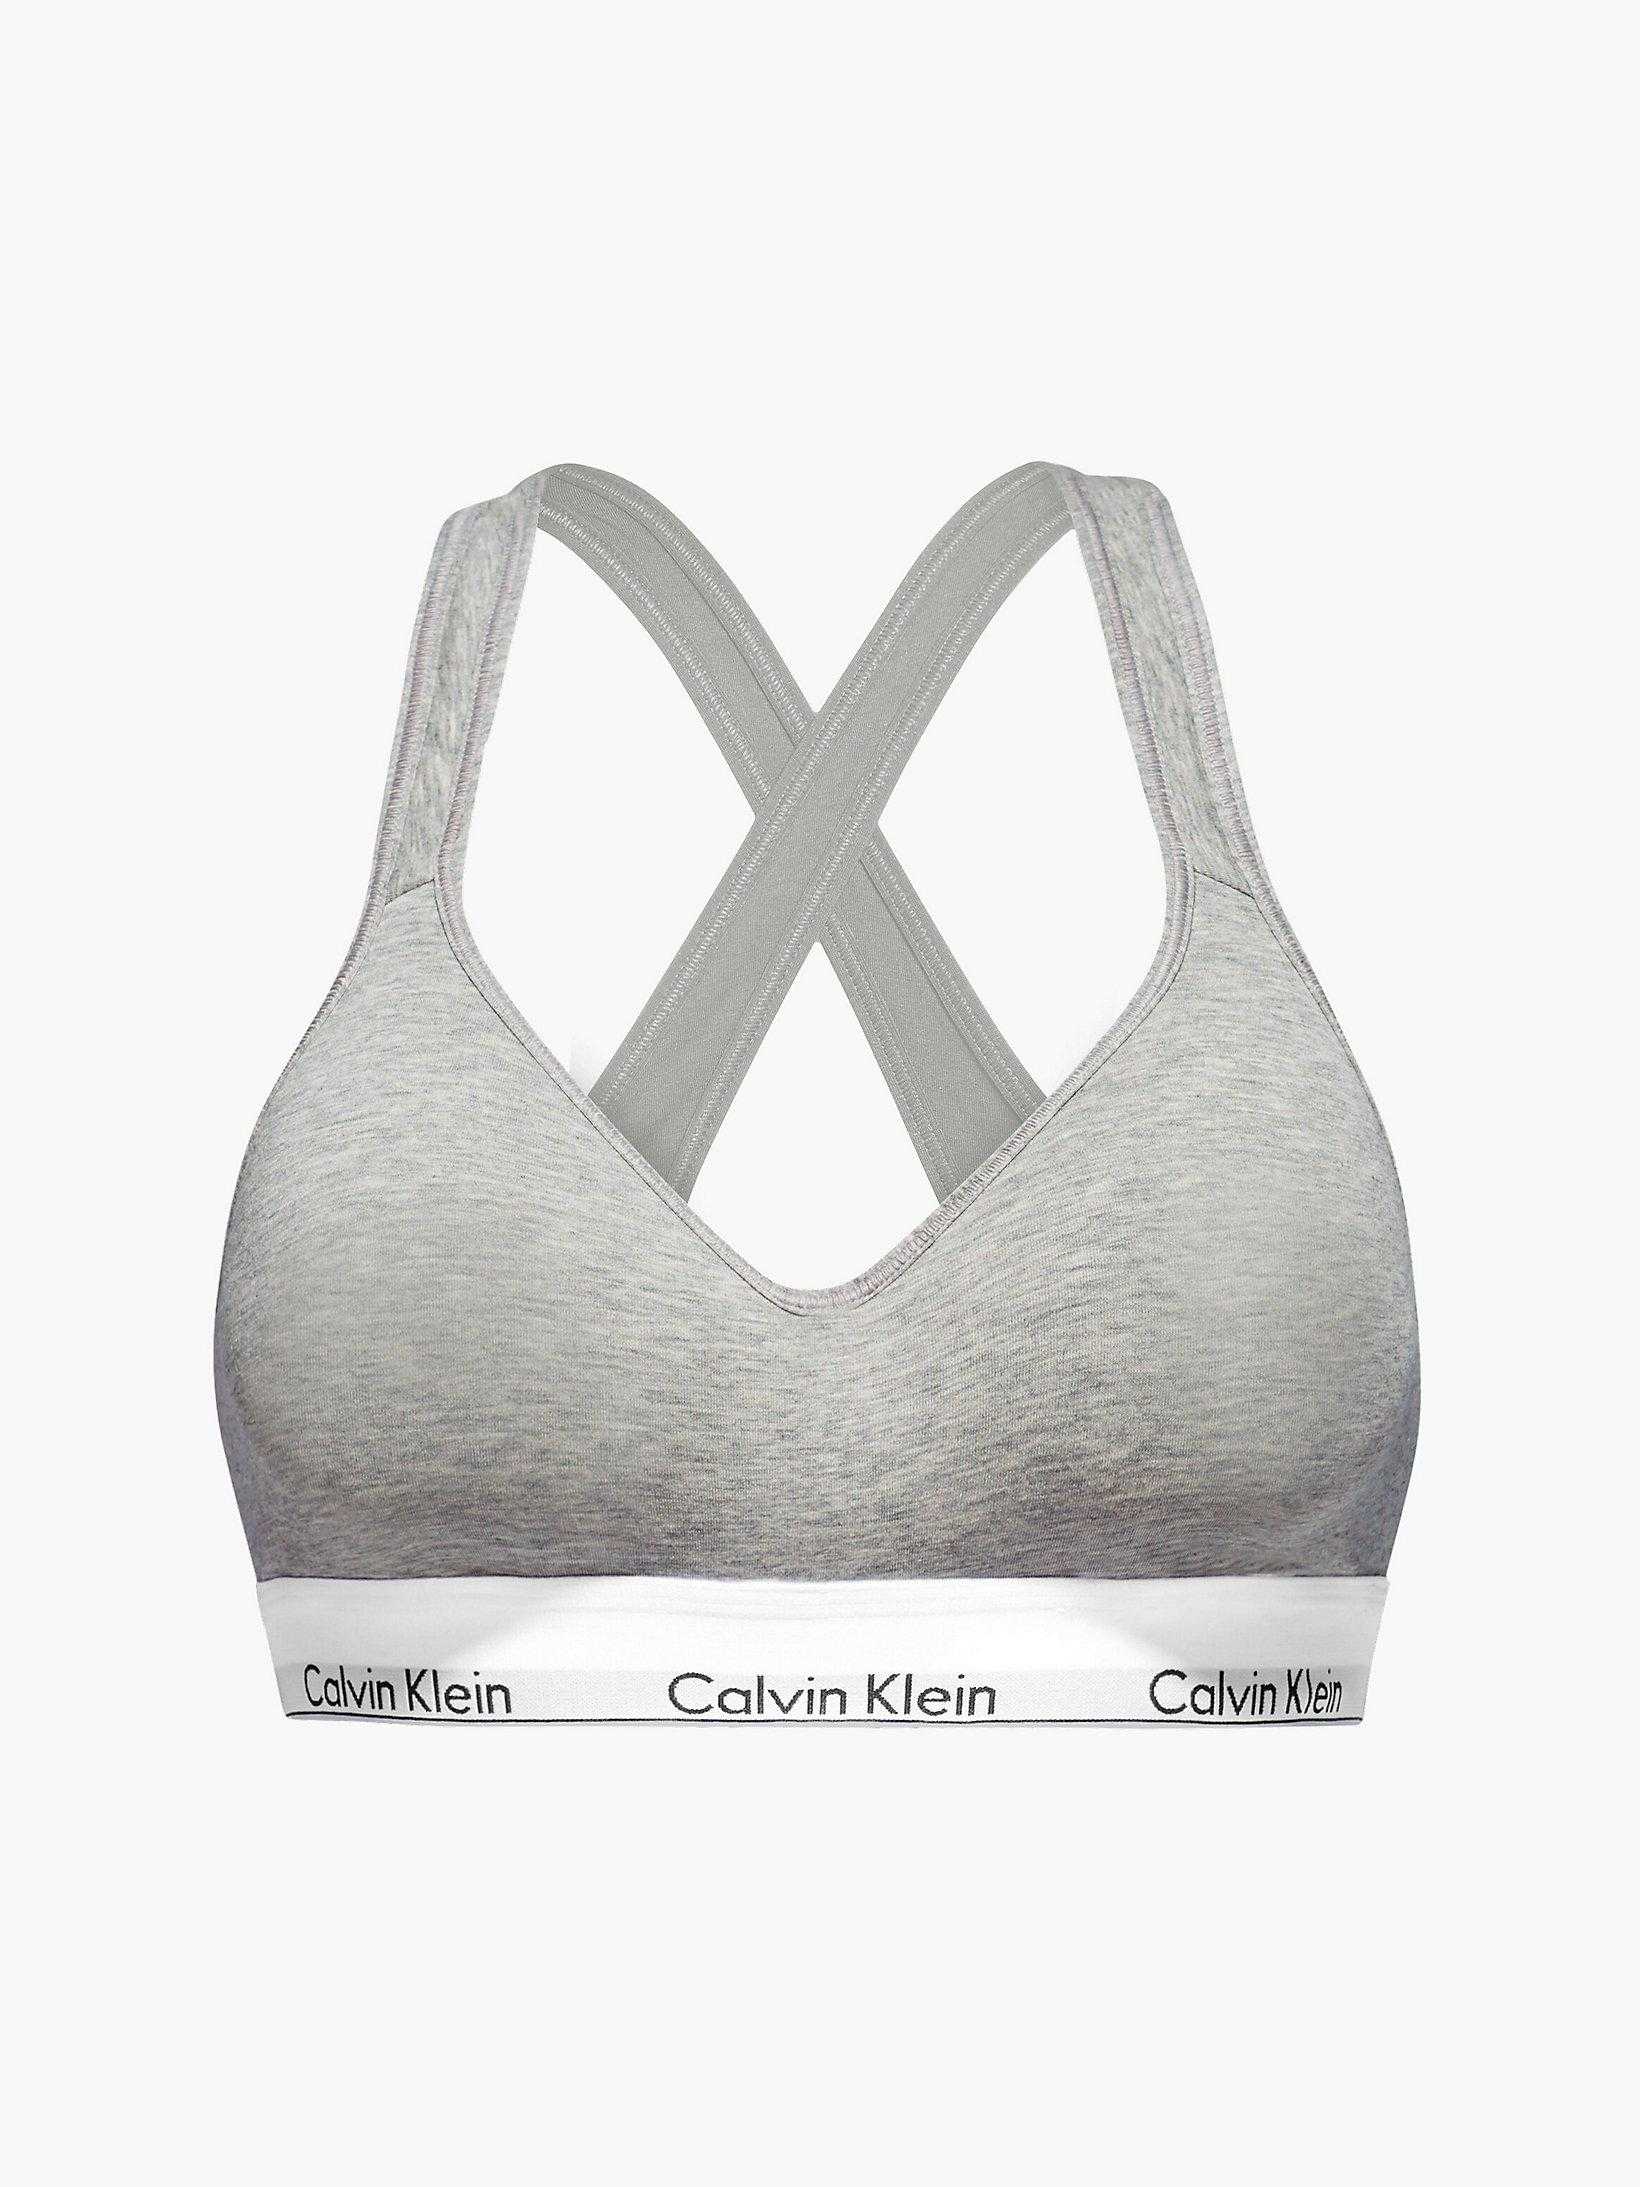 Top Preformado Calvin Klein Animal Print COLOR: gris, blanco, negro, animal print; TALLAS: xs, s, m, l, xl  -